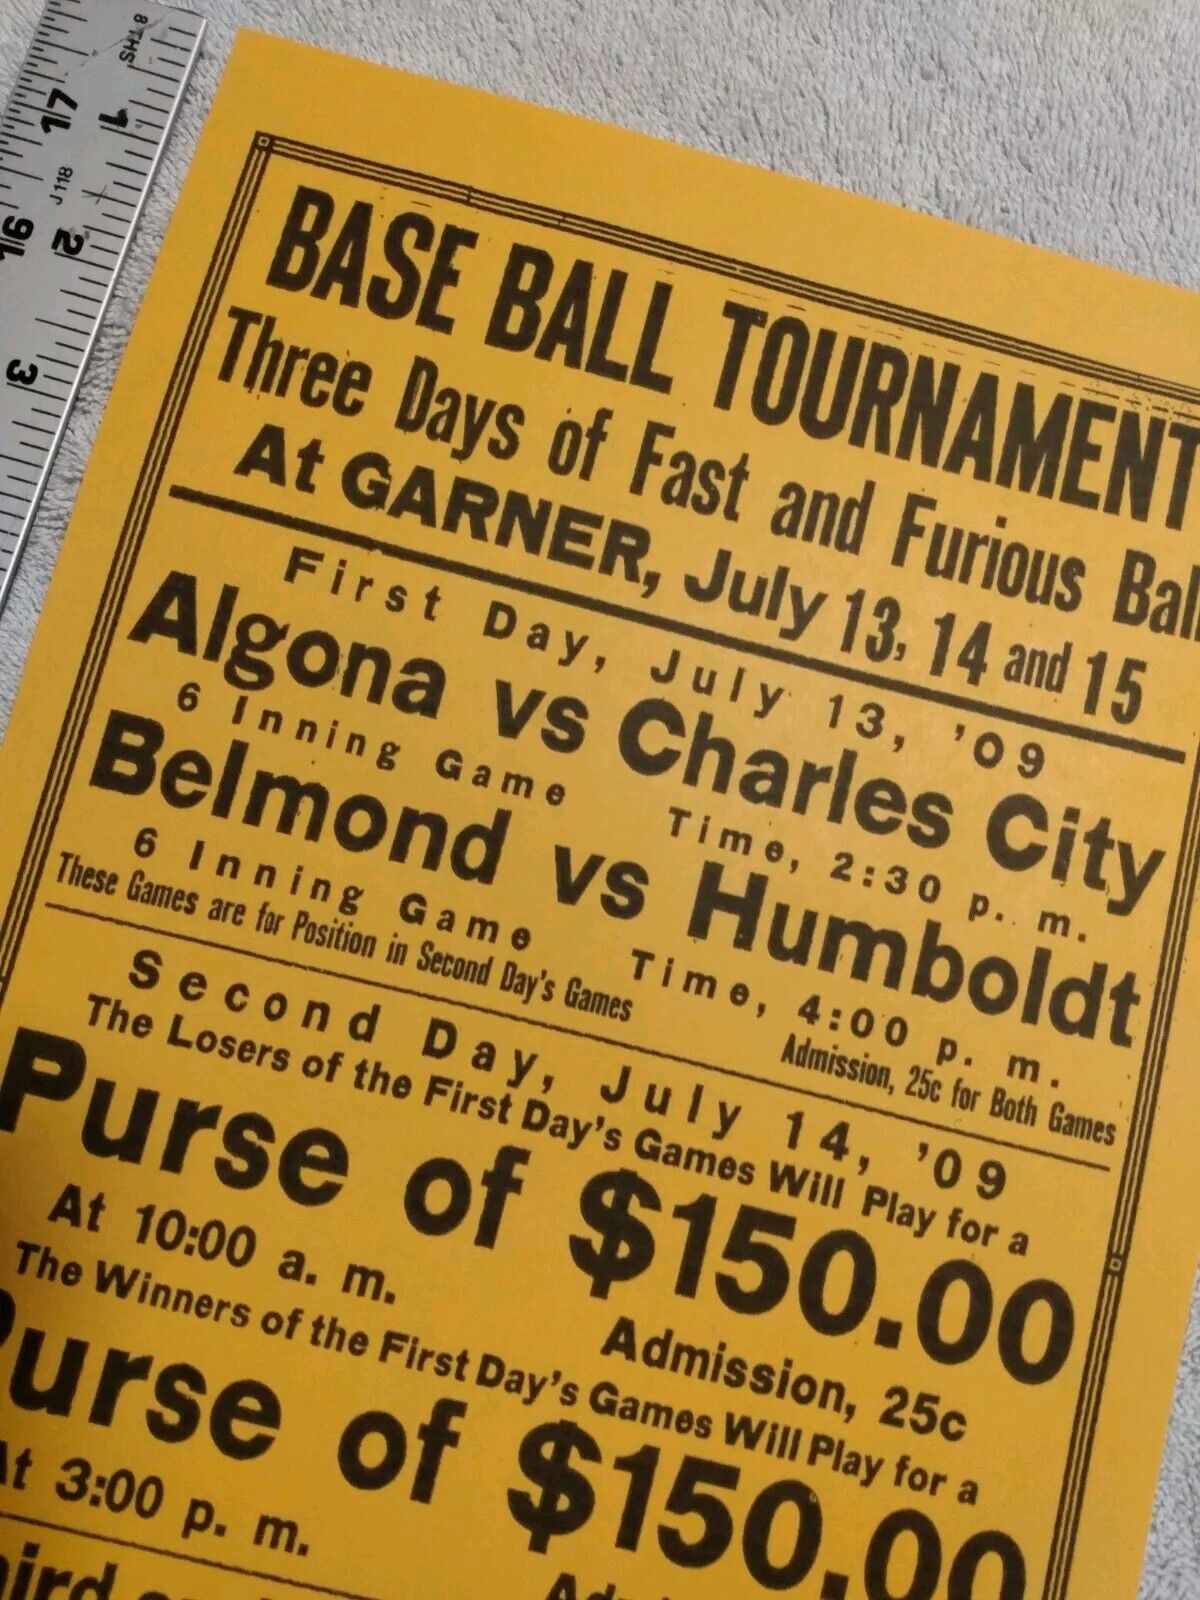 1909 Baseball Broadside Humboldt Algona Belmont Charles City Iowa  8.5 X 14 In